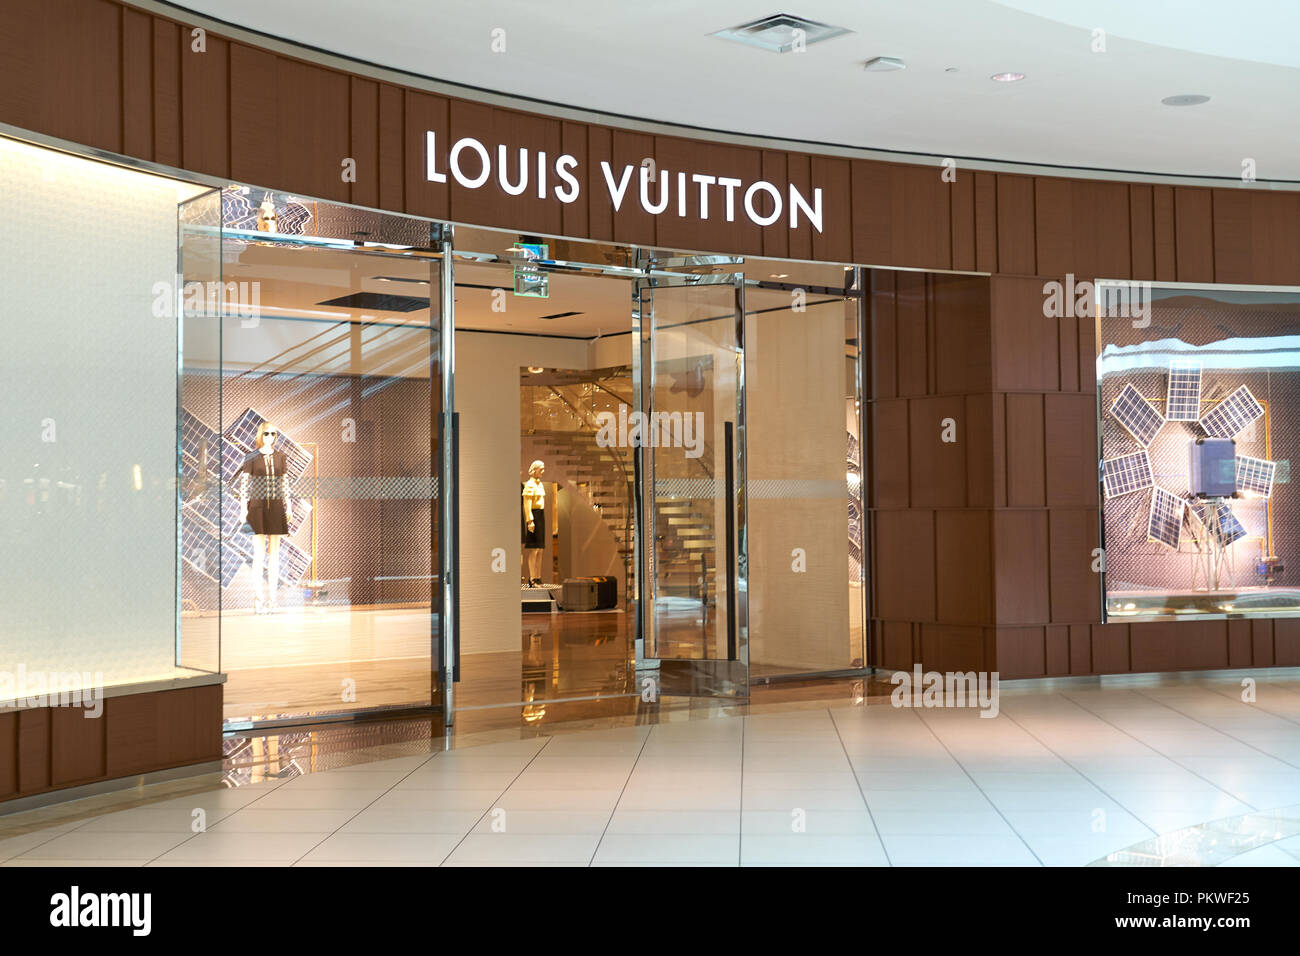 AVENTURA, USA - AUGUST 23, 2018: Louis Vuitton famous boutique in